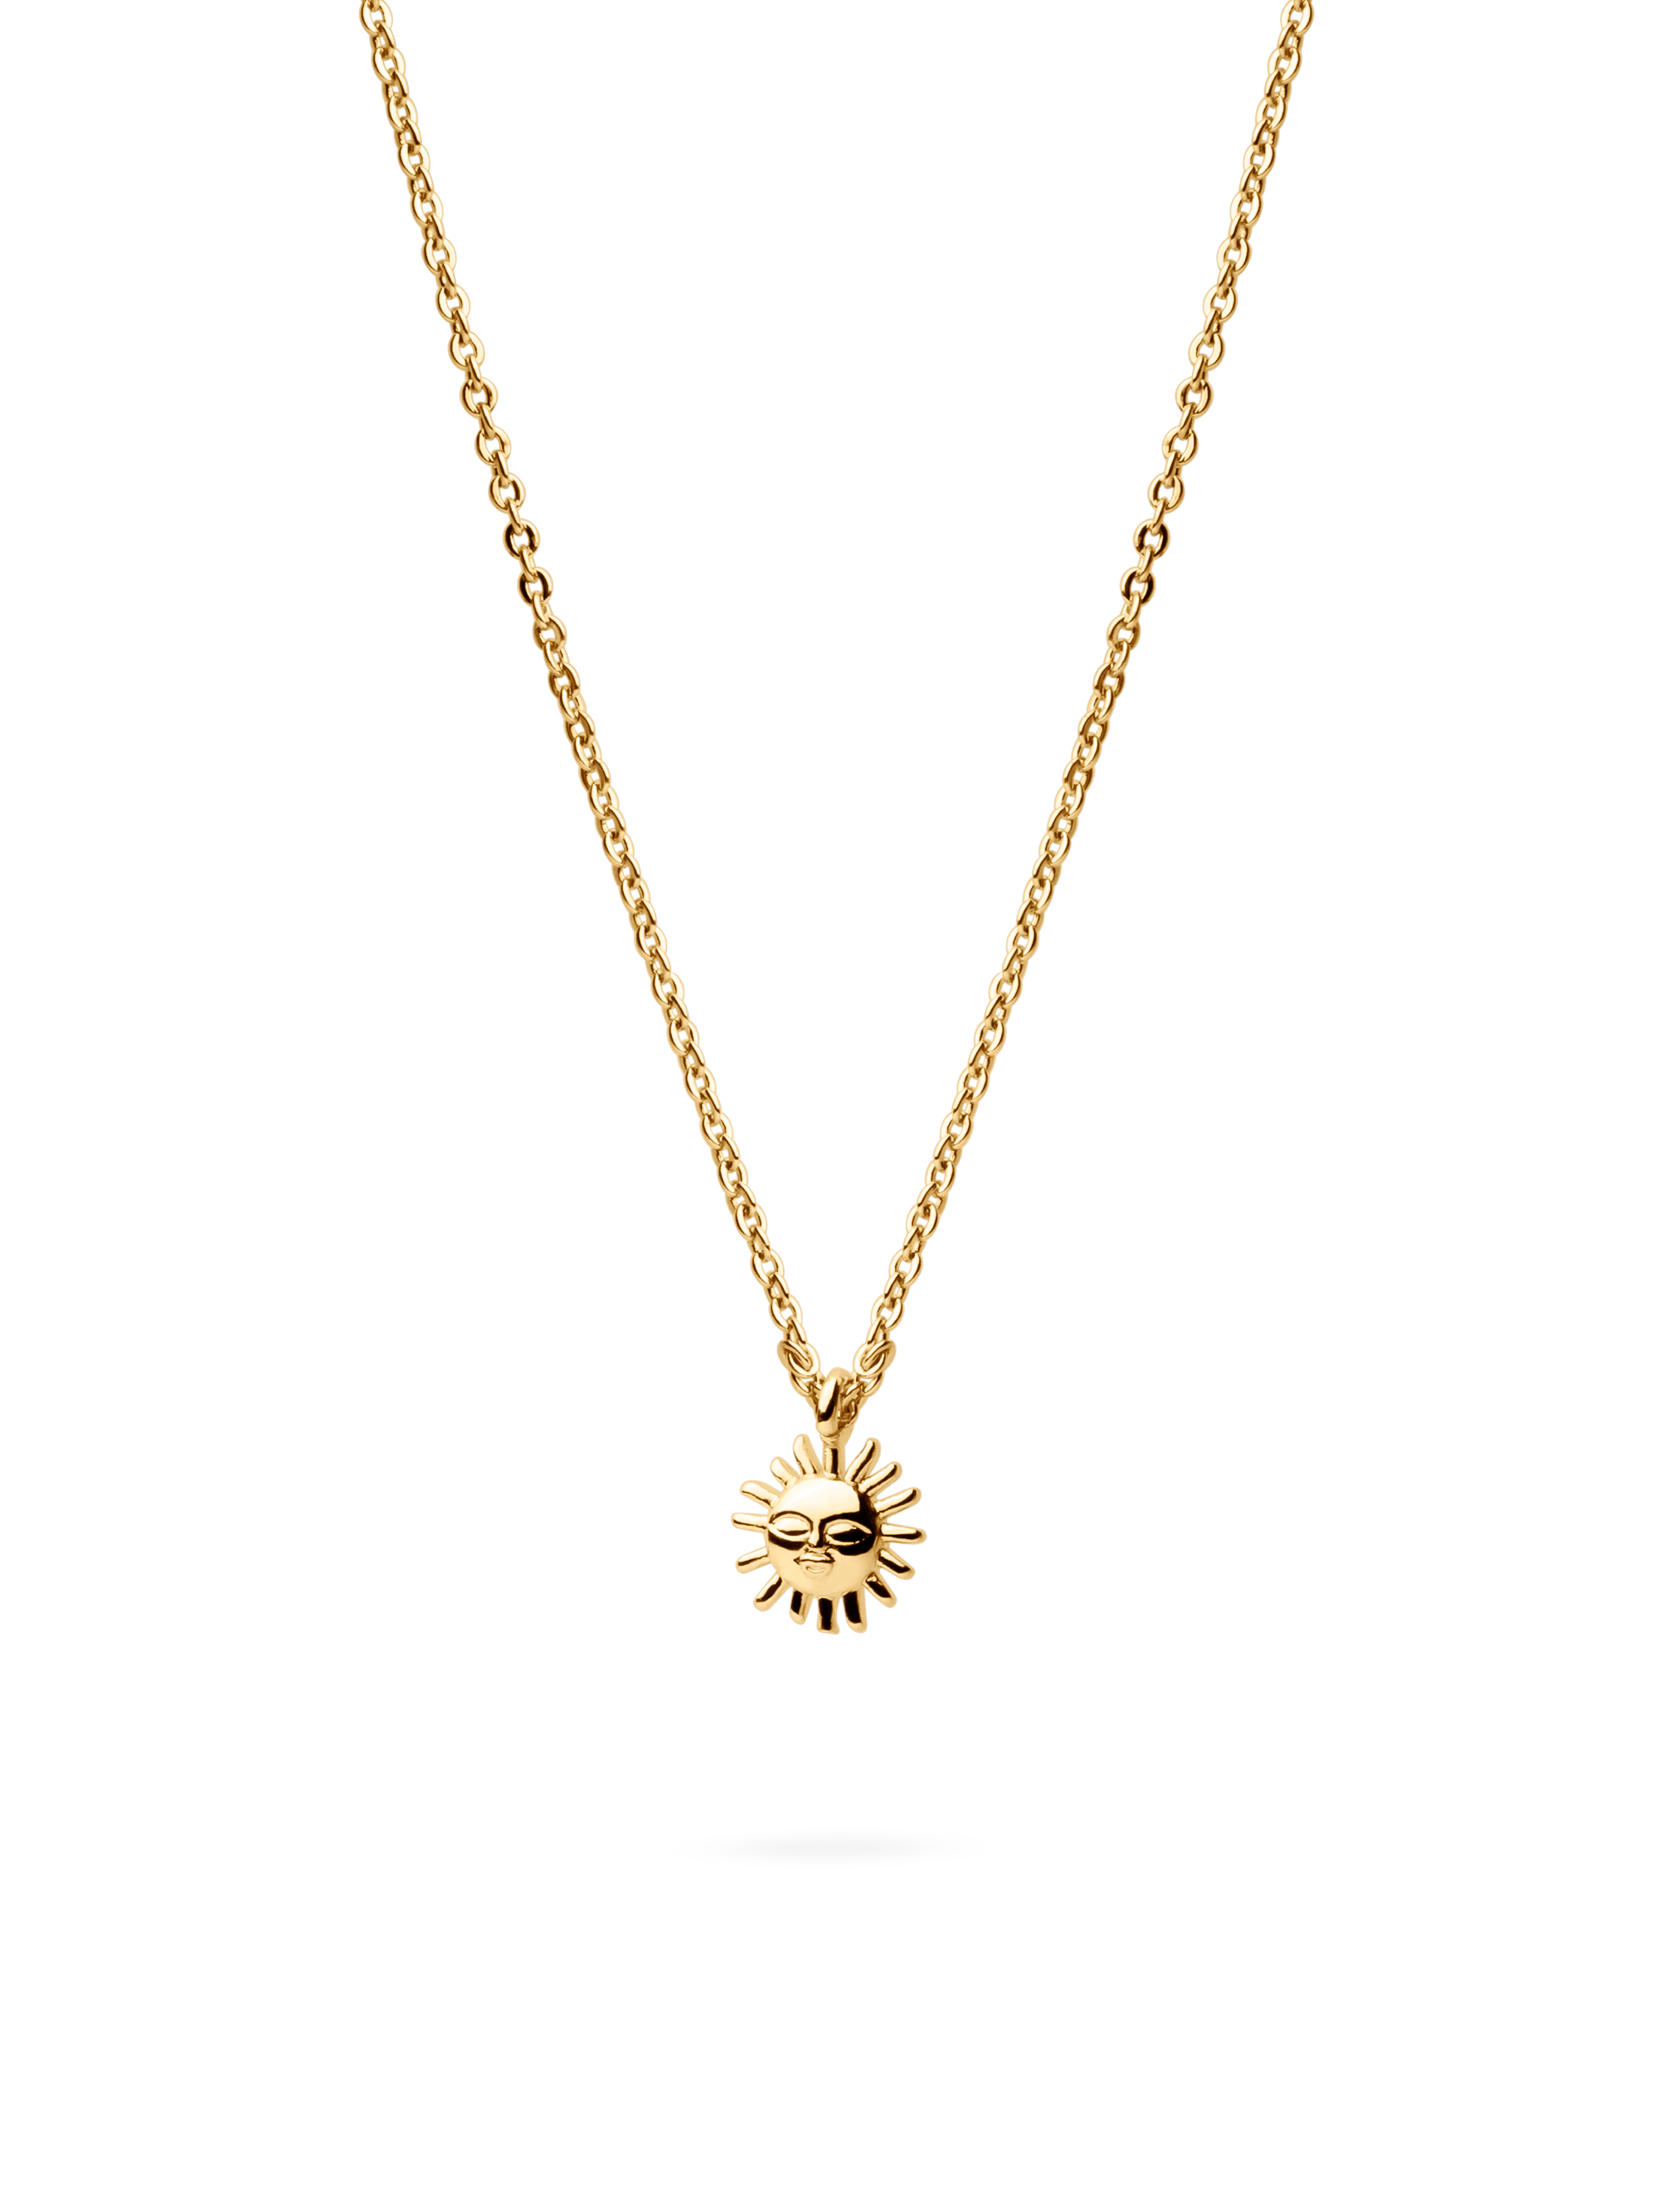 sun necklace 18k gold plated brass